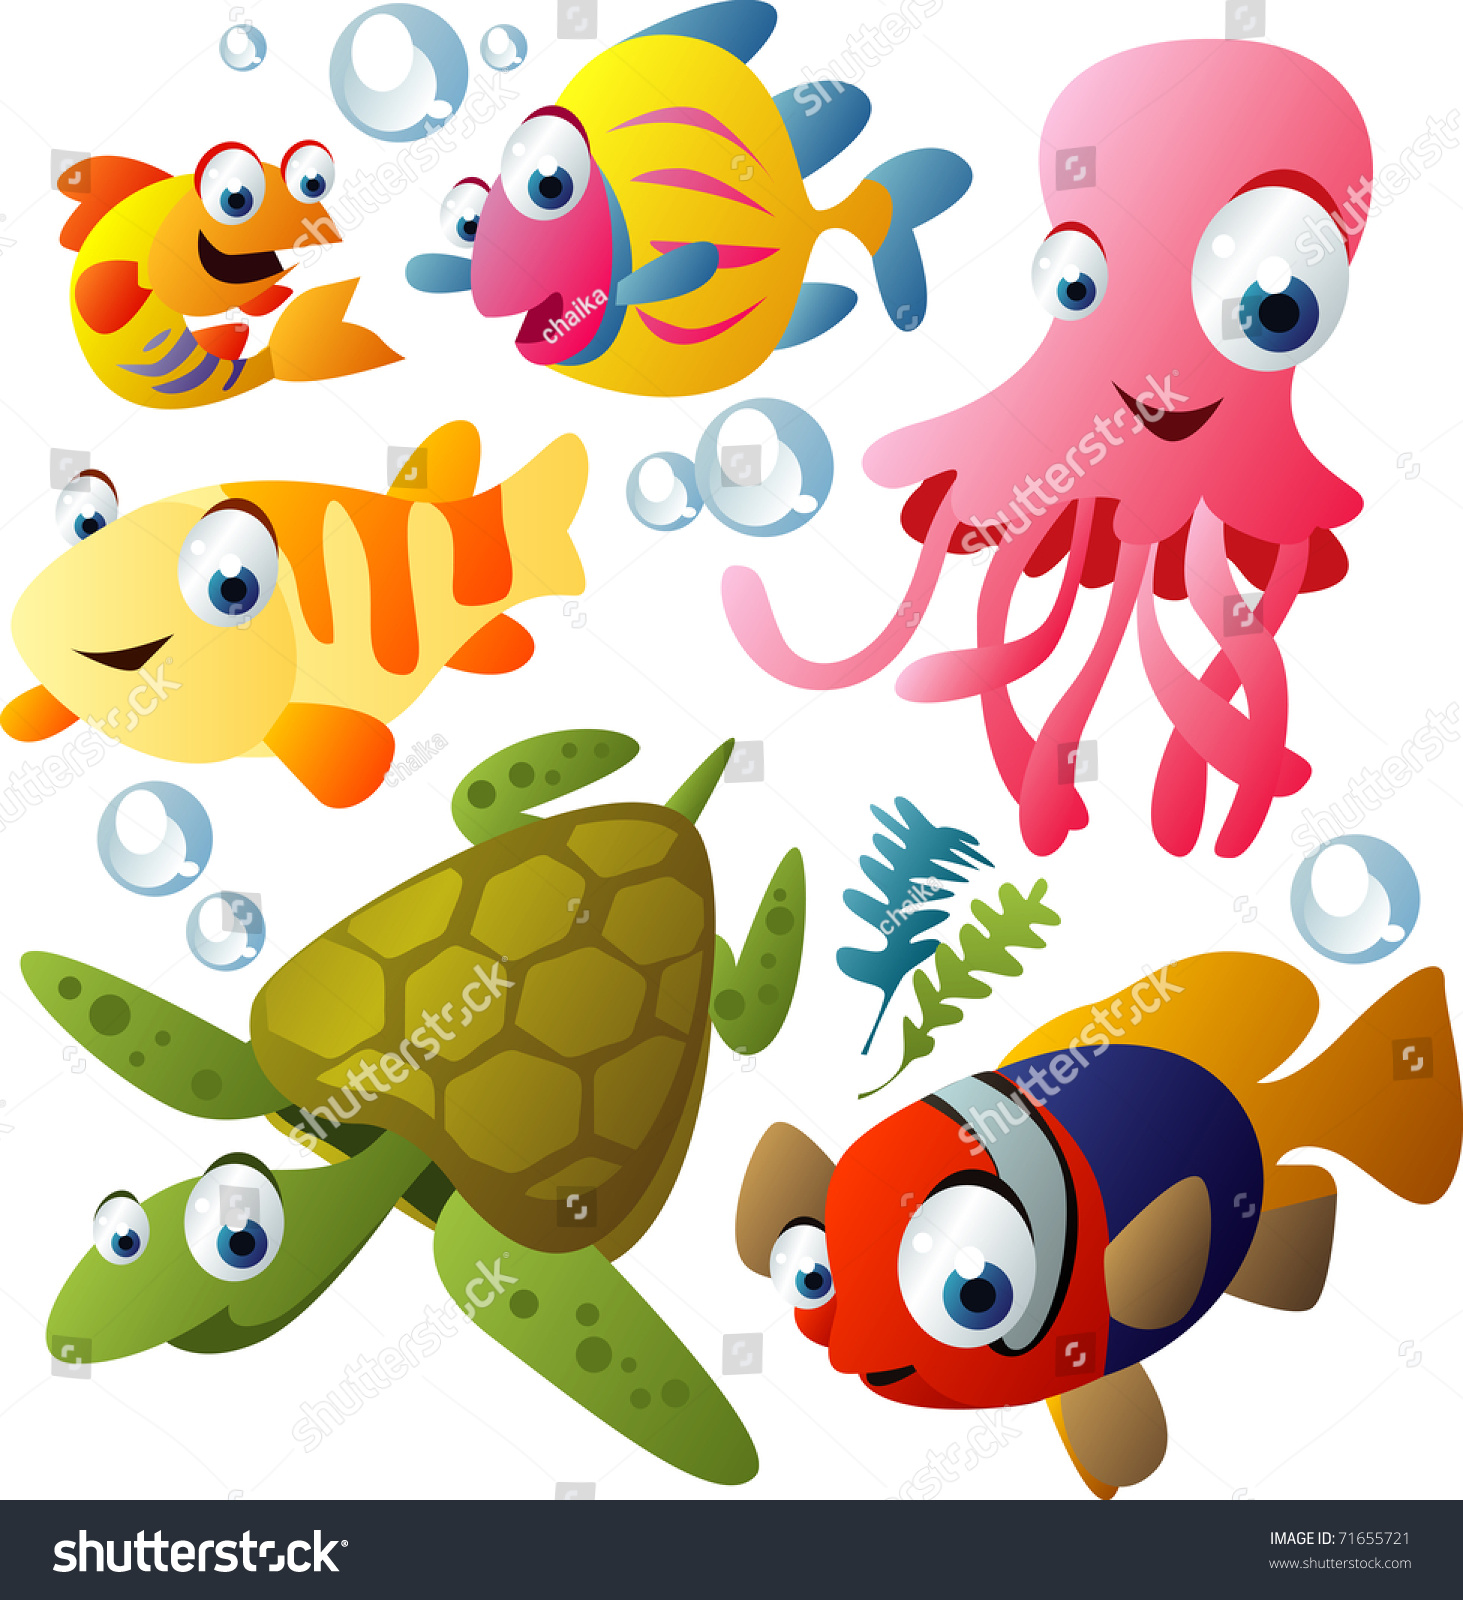 Vector Sea Animals - 71655721 : Shutterstock